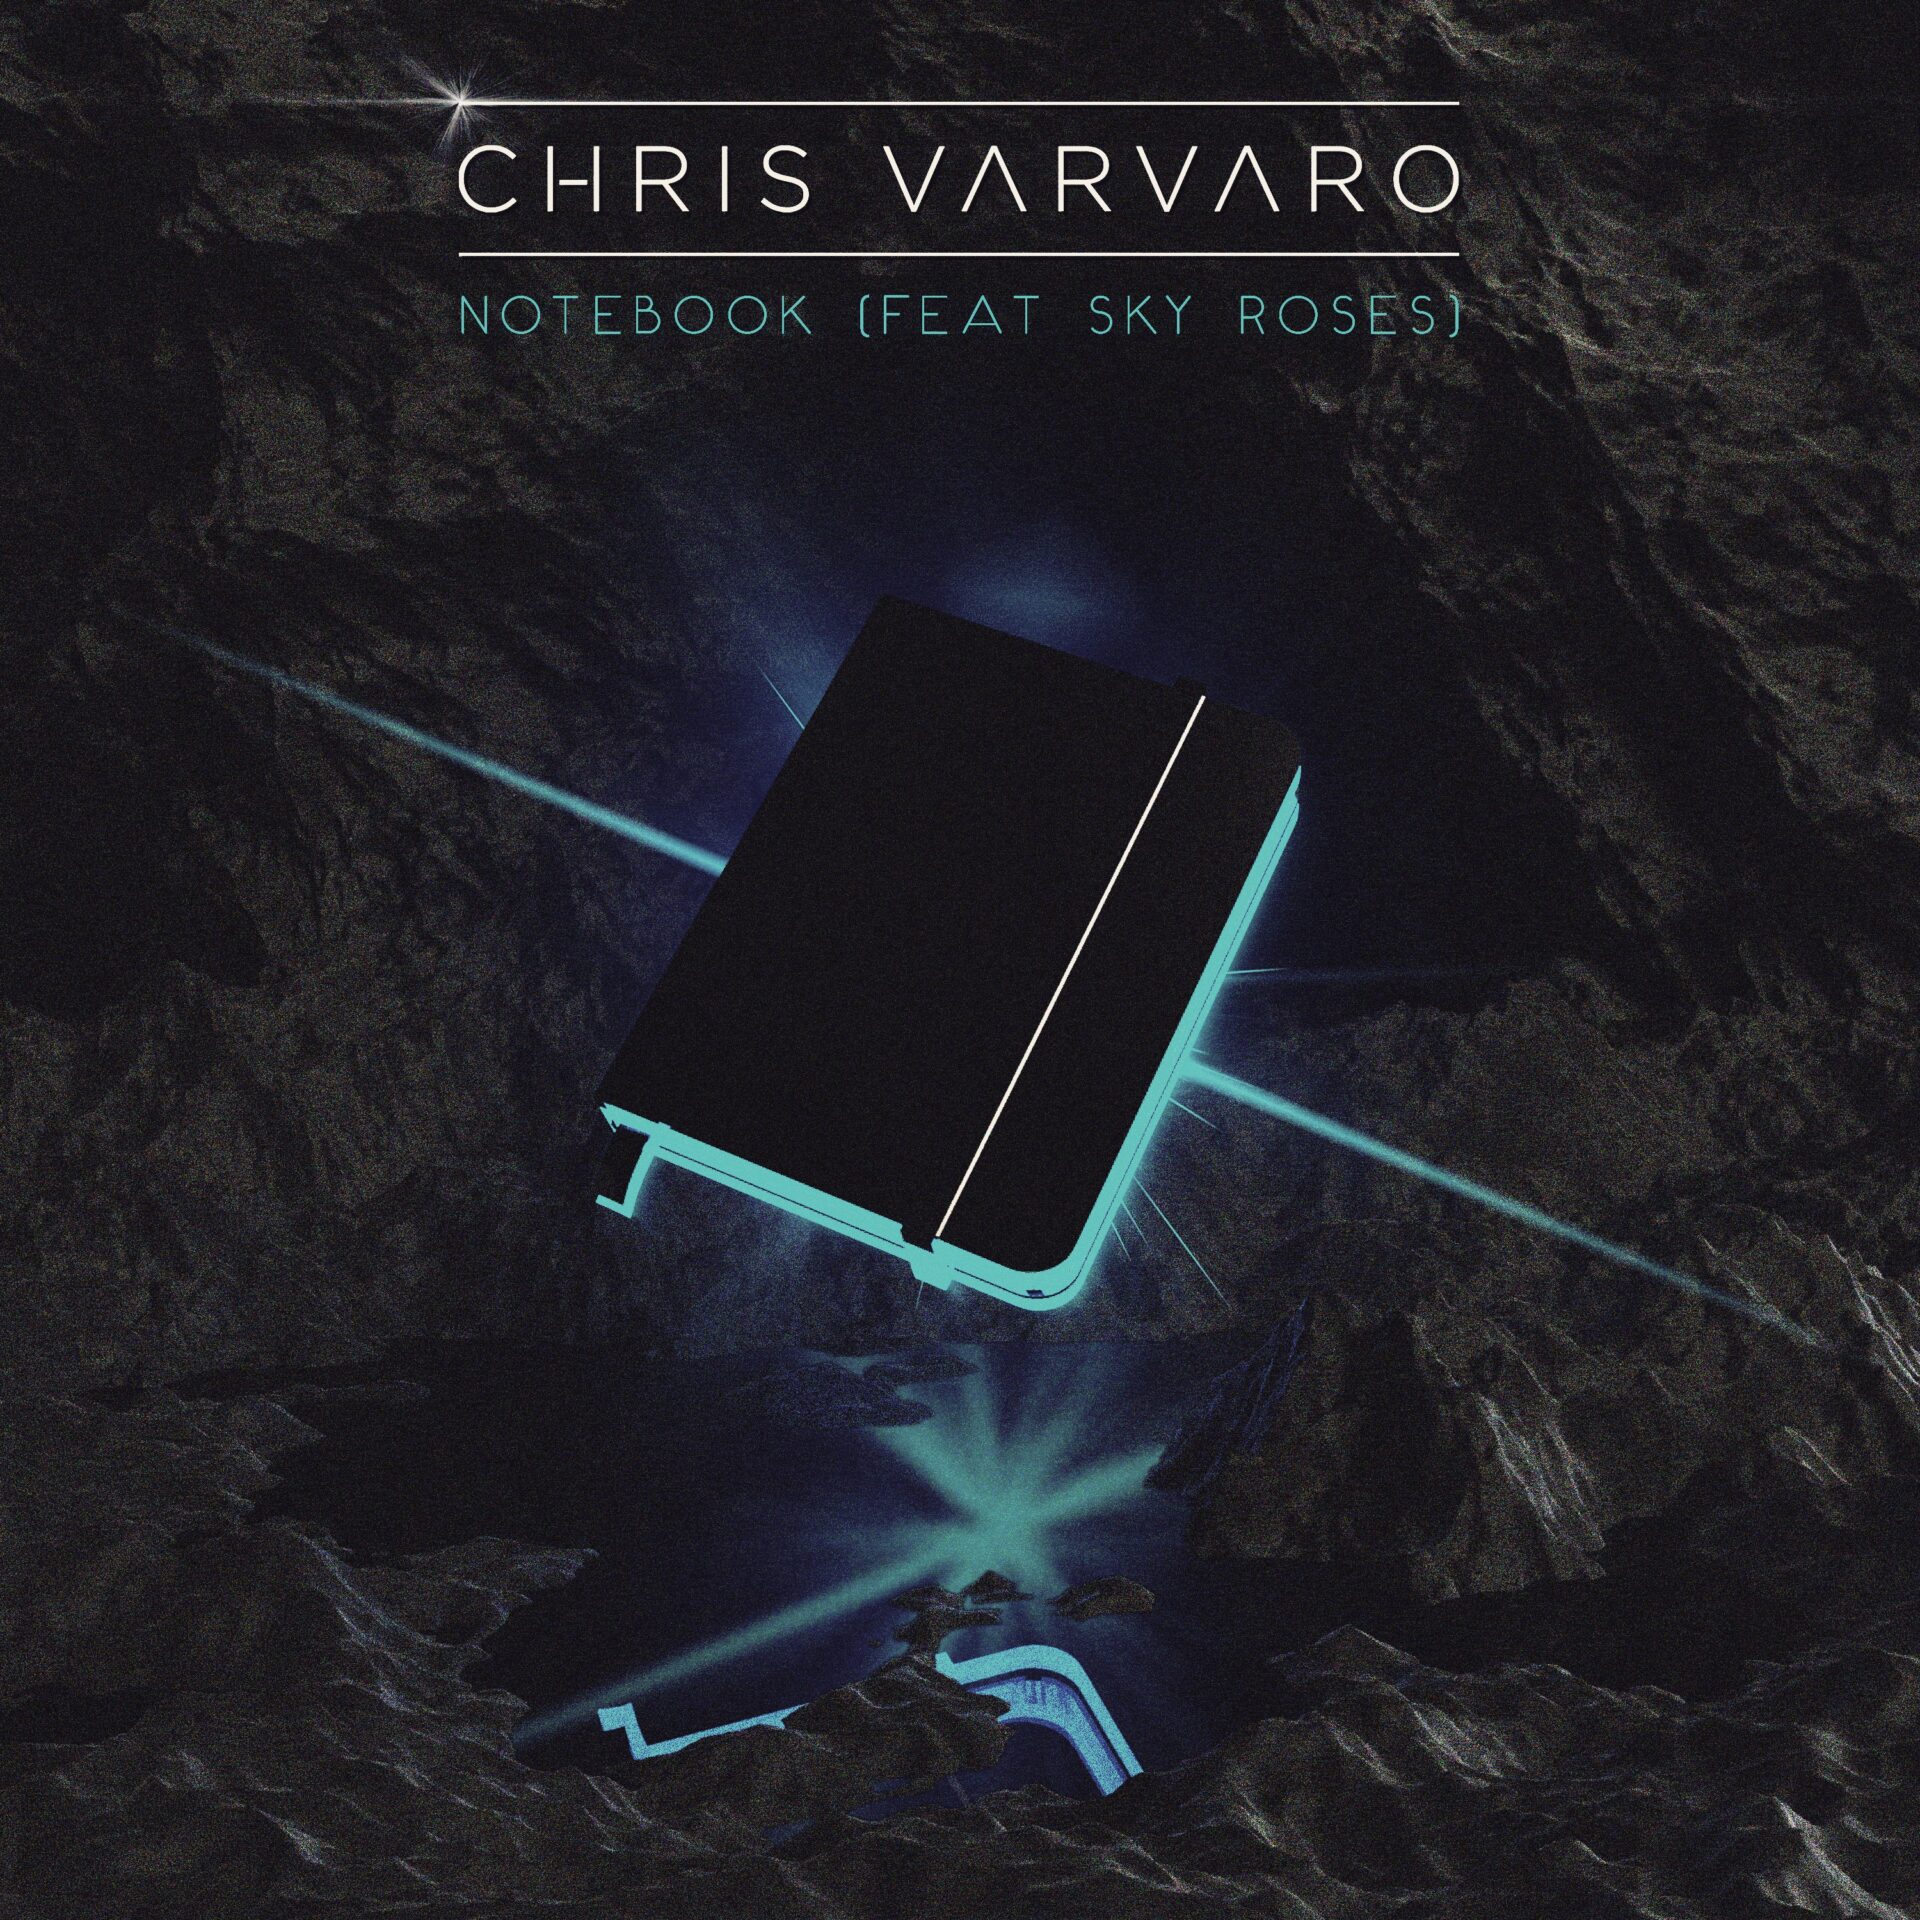 PREMIERE: Chris Varvaro Lands Sky Roses for Amazing New Single, “Notebook”